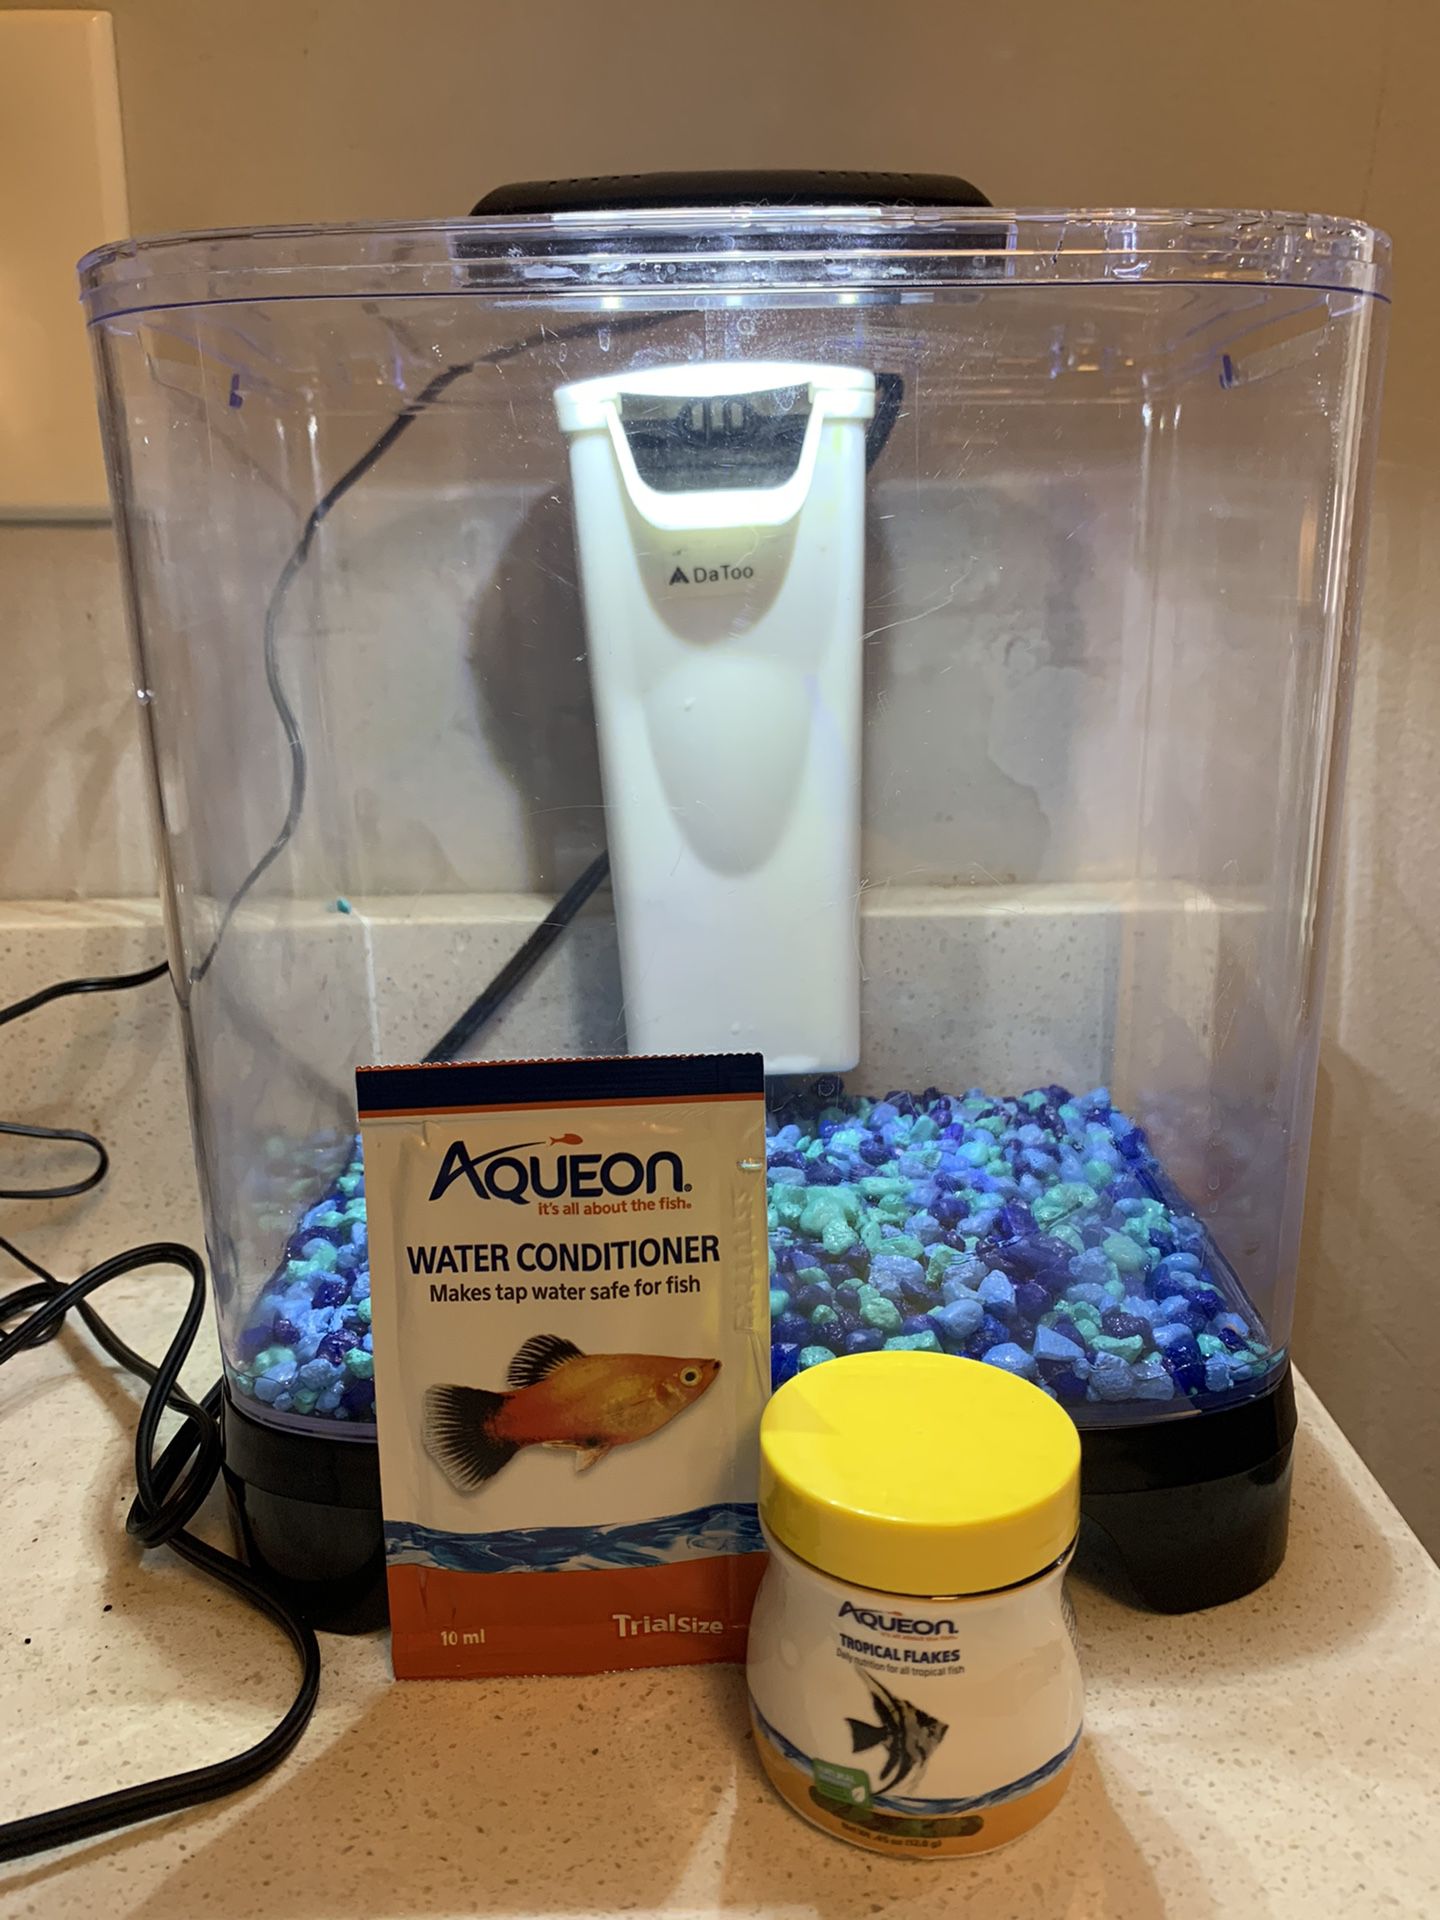 Imagitarium 1.4 gal fish tank w filter